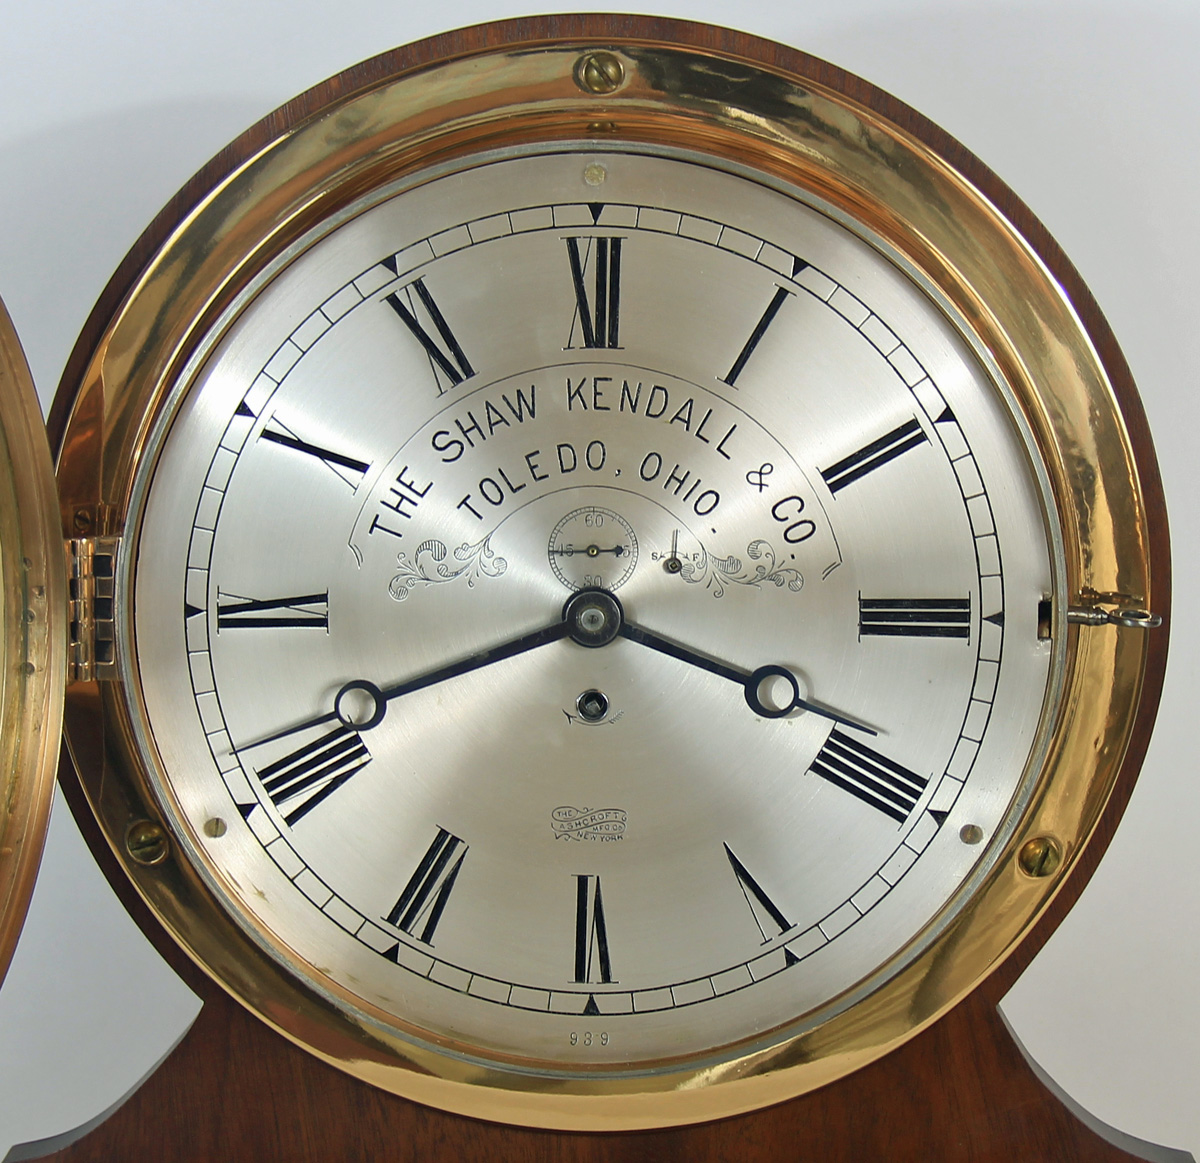 Eastman Clock C o. 10 inch Marine Clock for Shaw Kendall & Co.